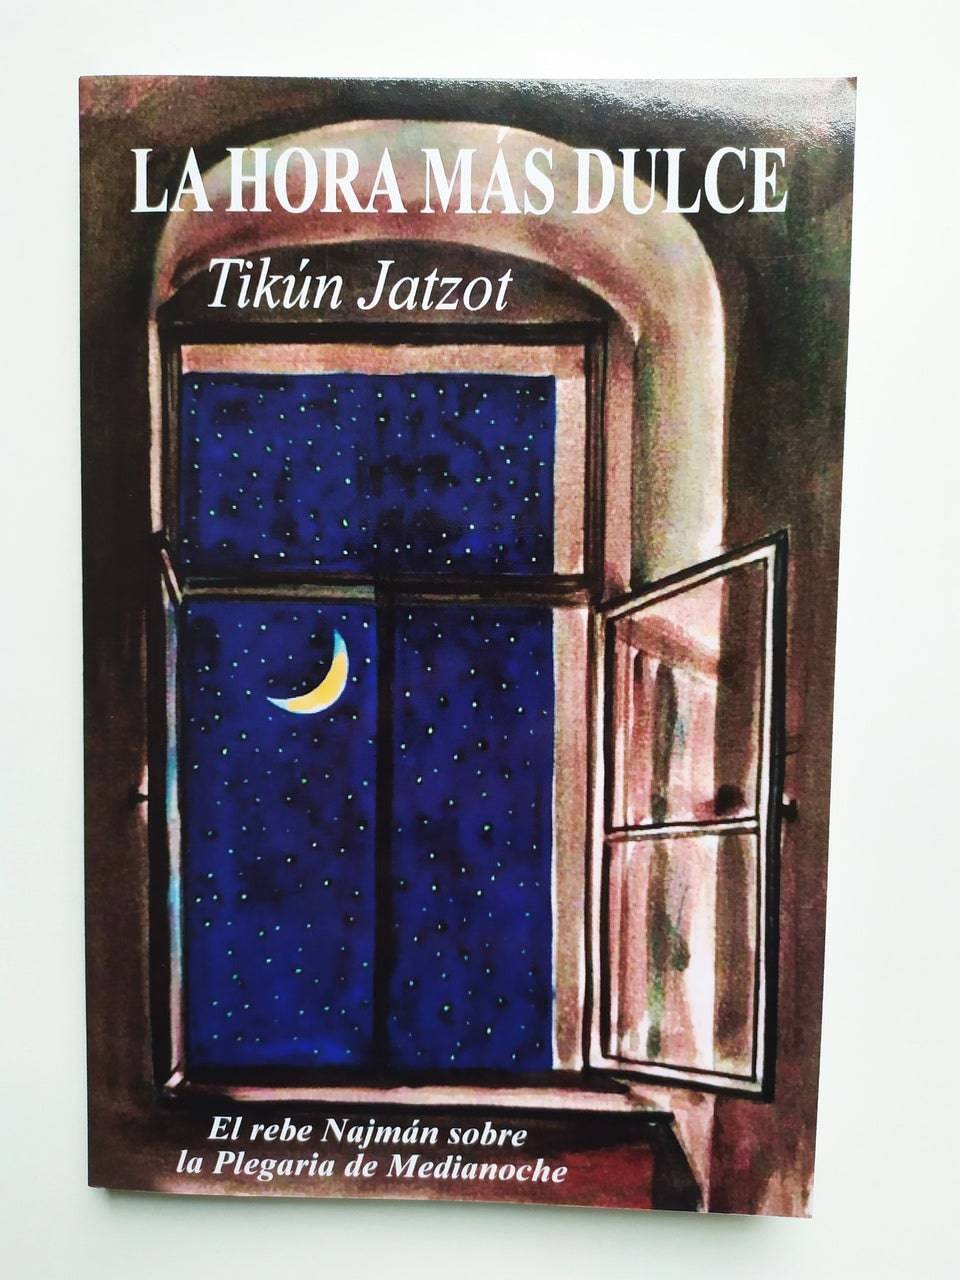 La hora mas dulce, (Tikún Jatzot) - Libreria Jerusalem Centro